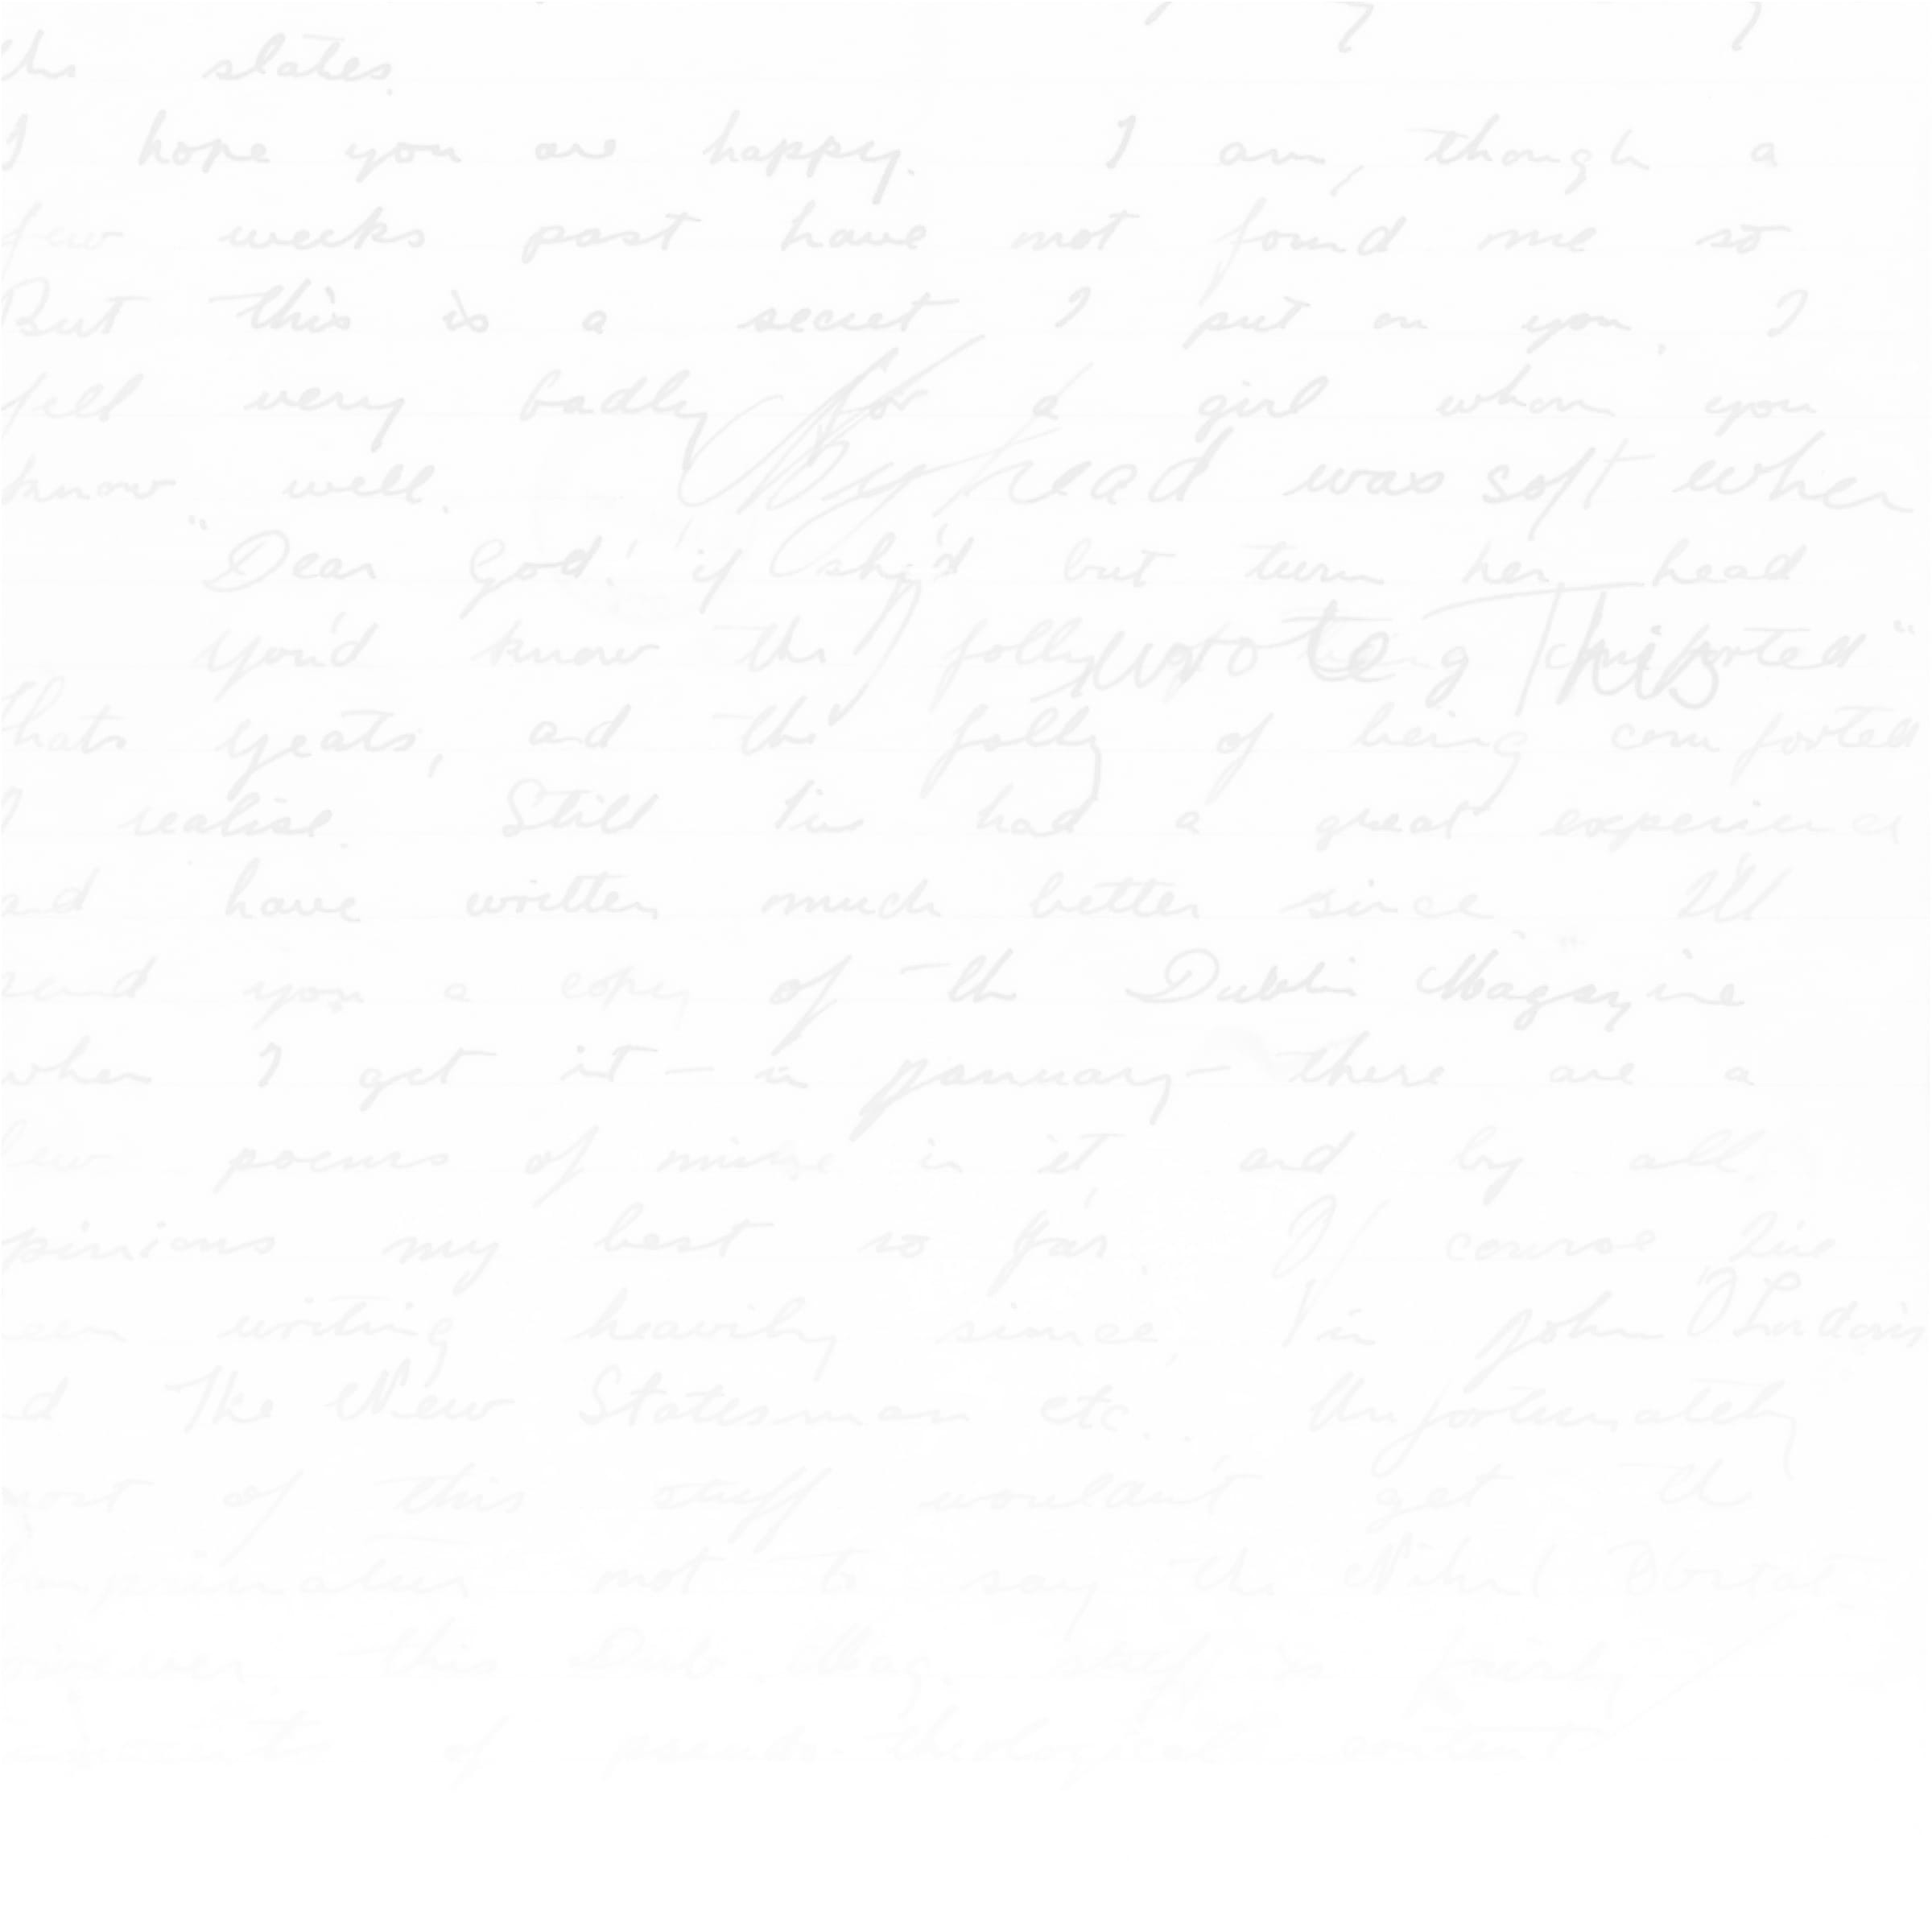 kavanagh-bg-handwritten_web-1669994479.jpg